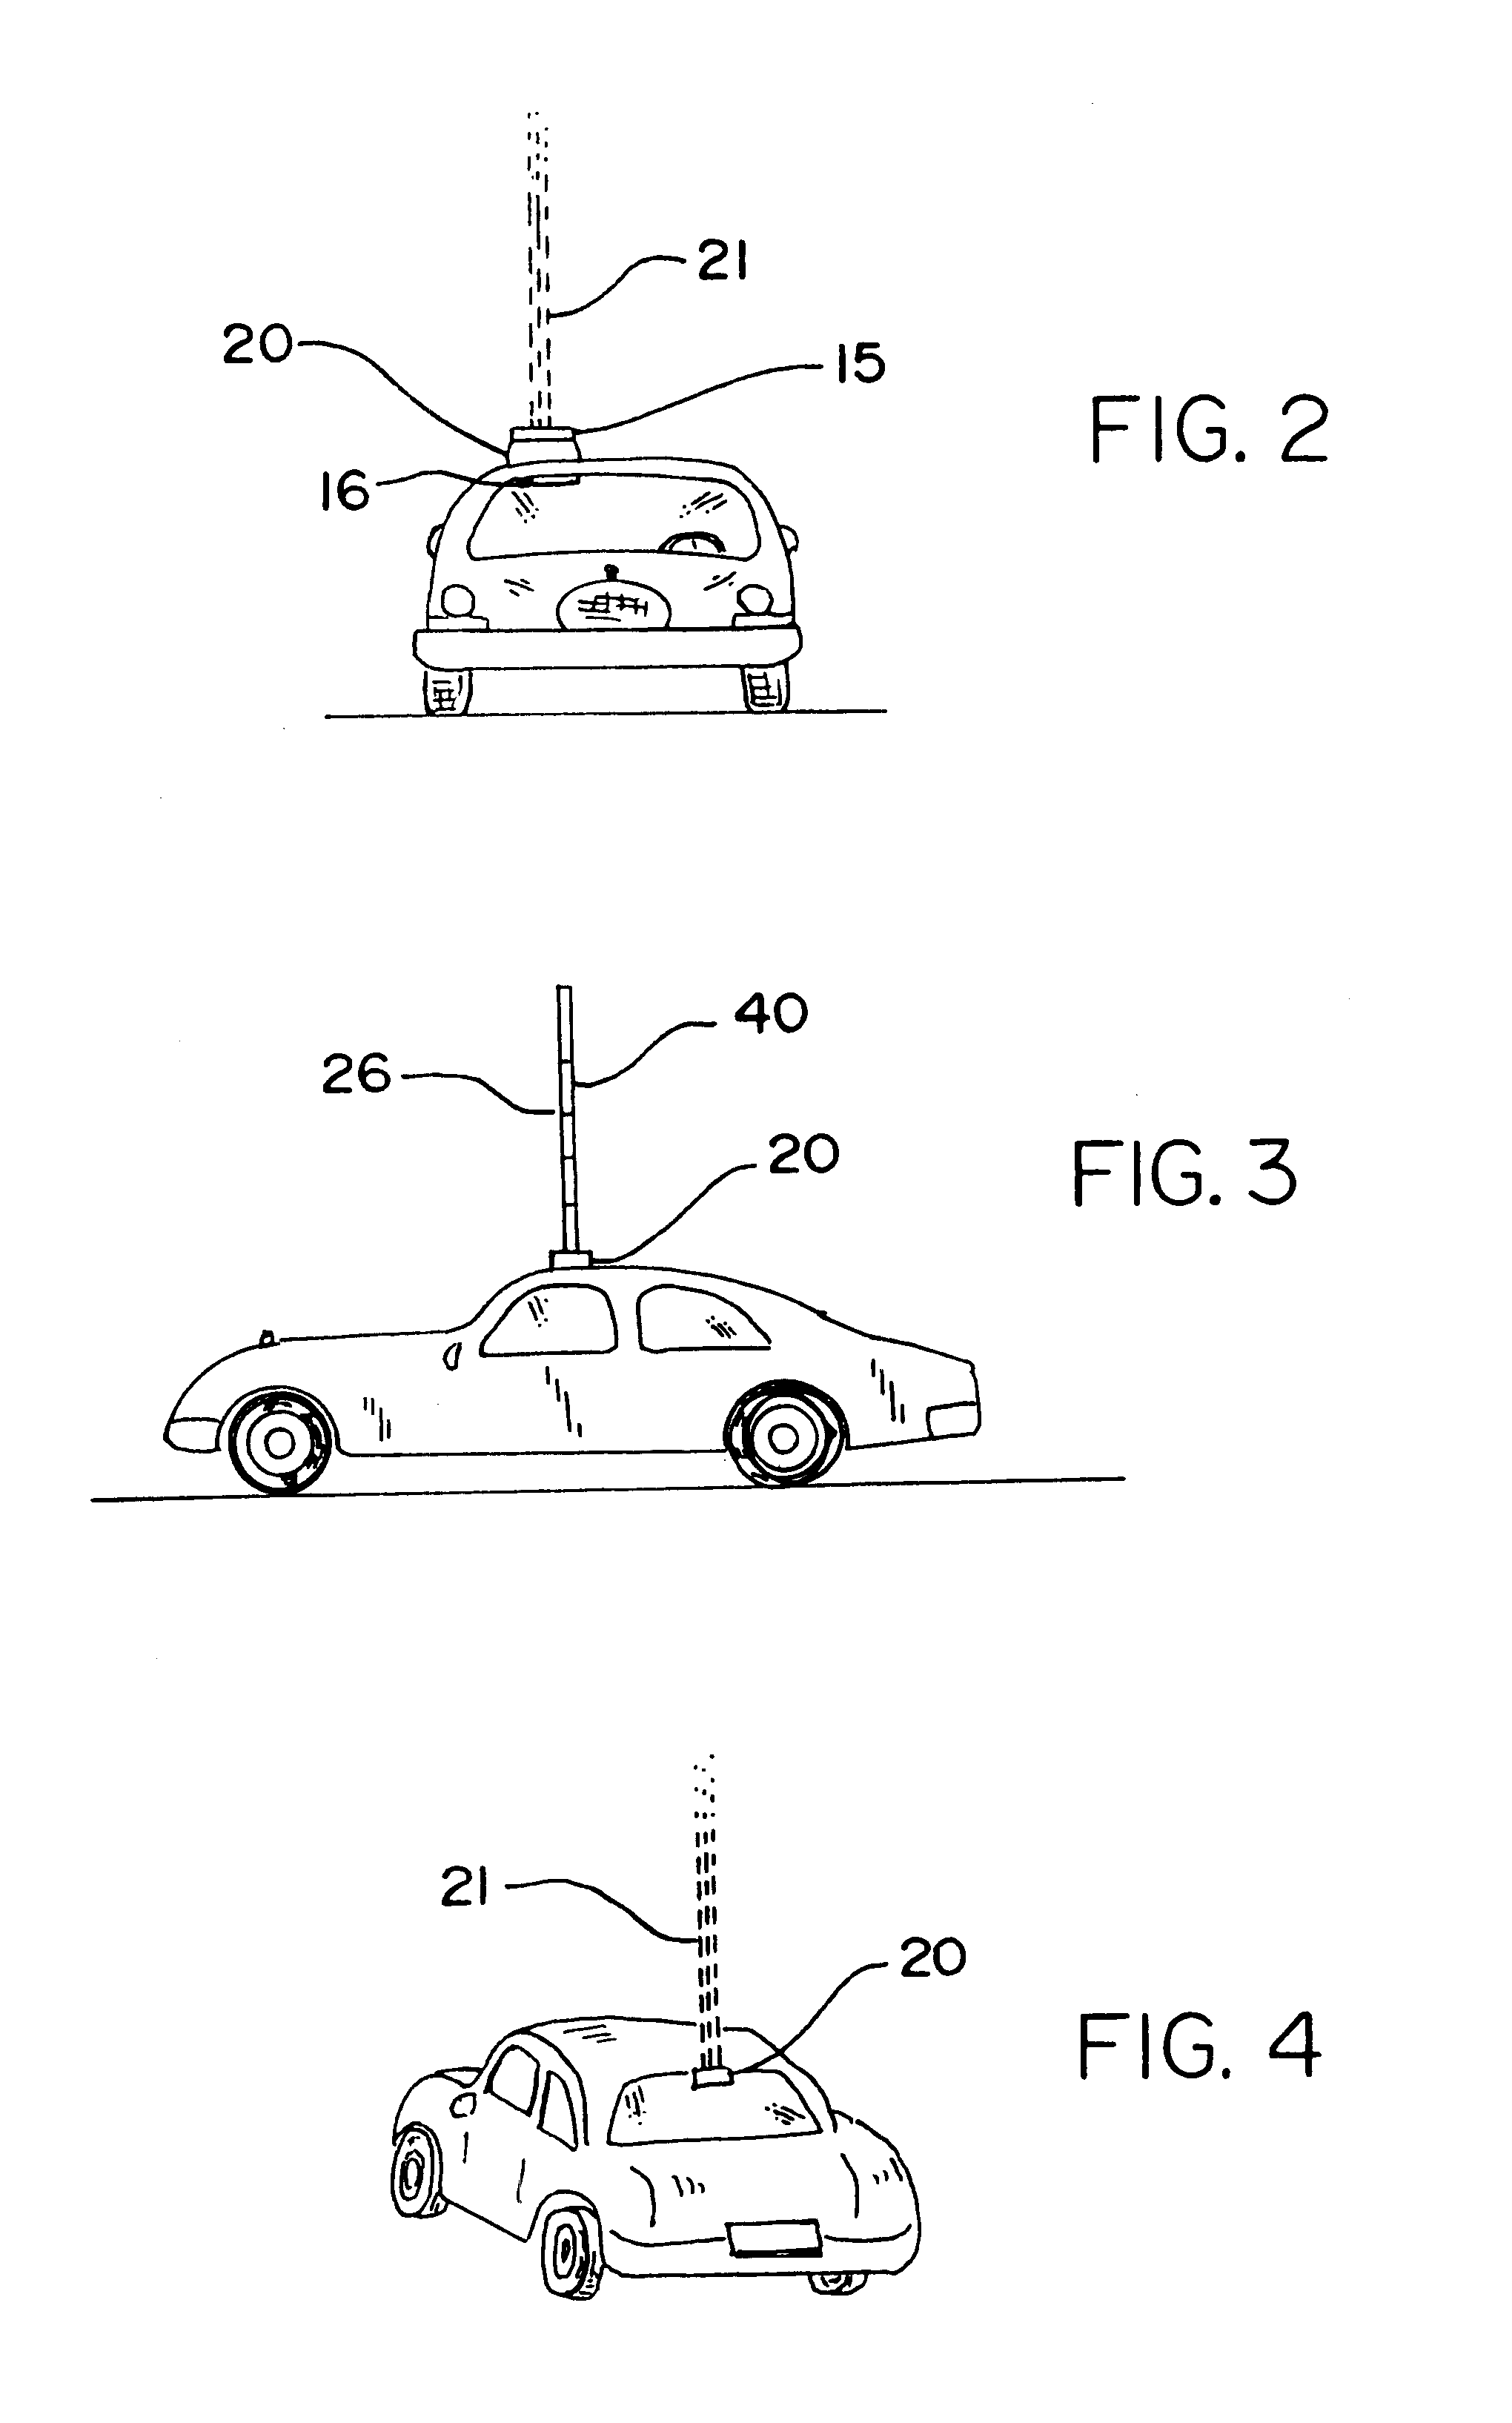 Vehicle locator device